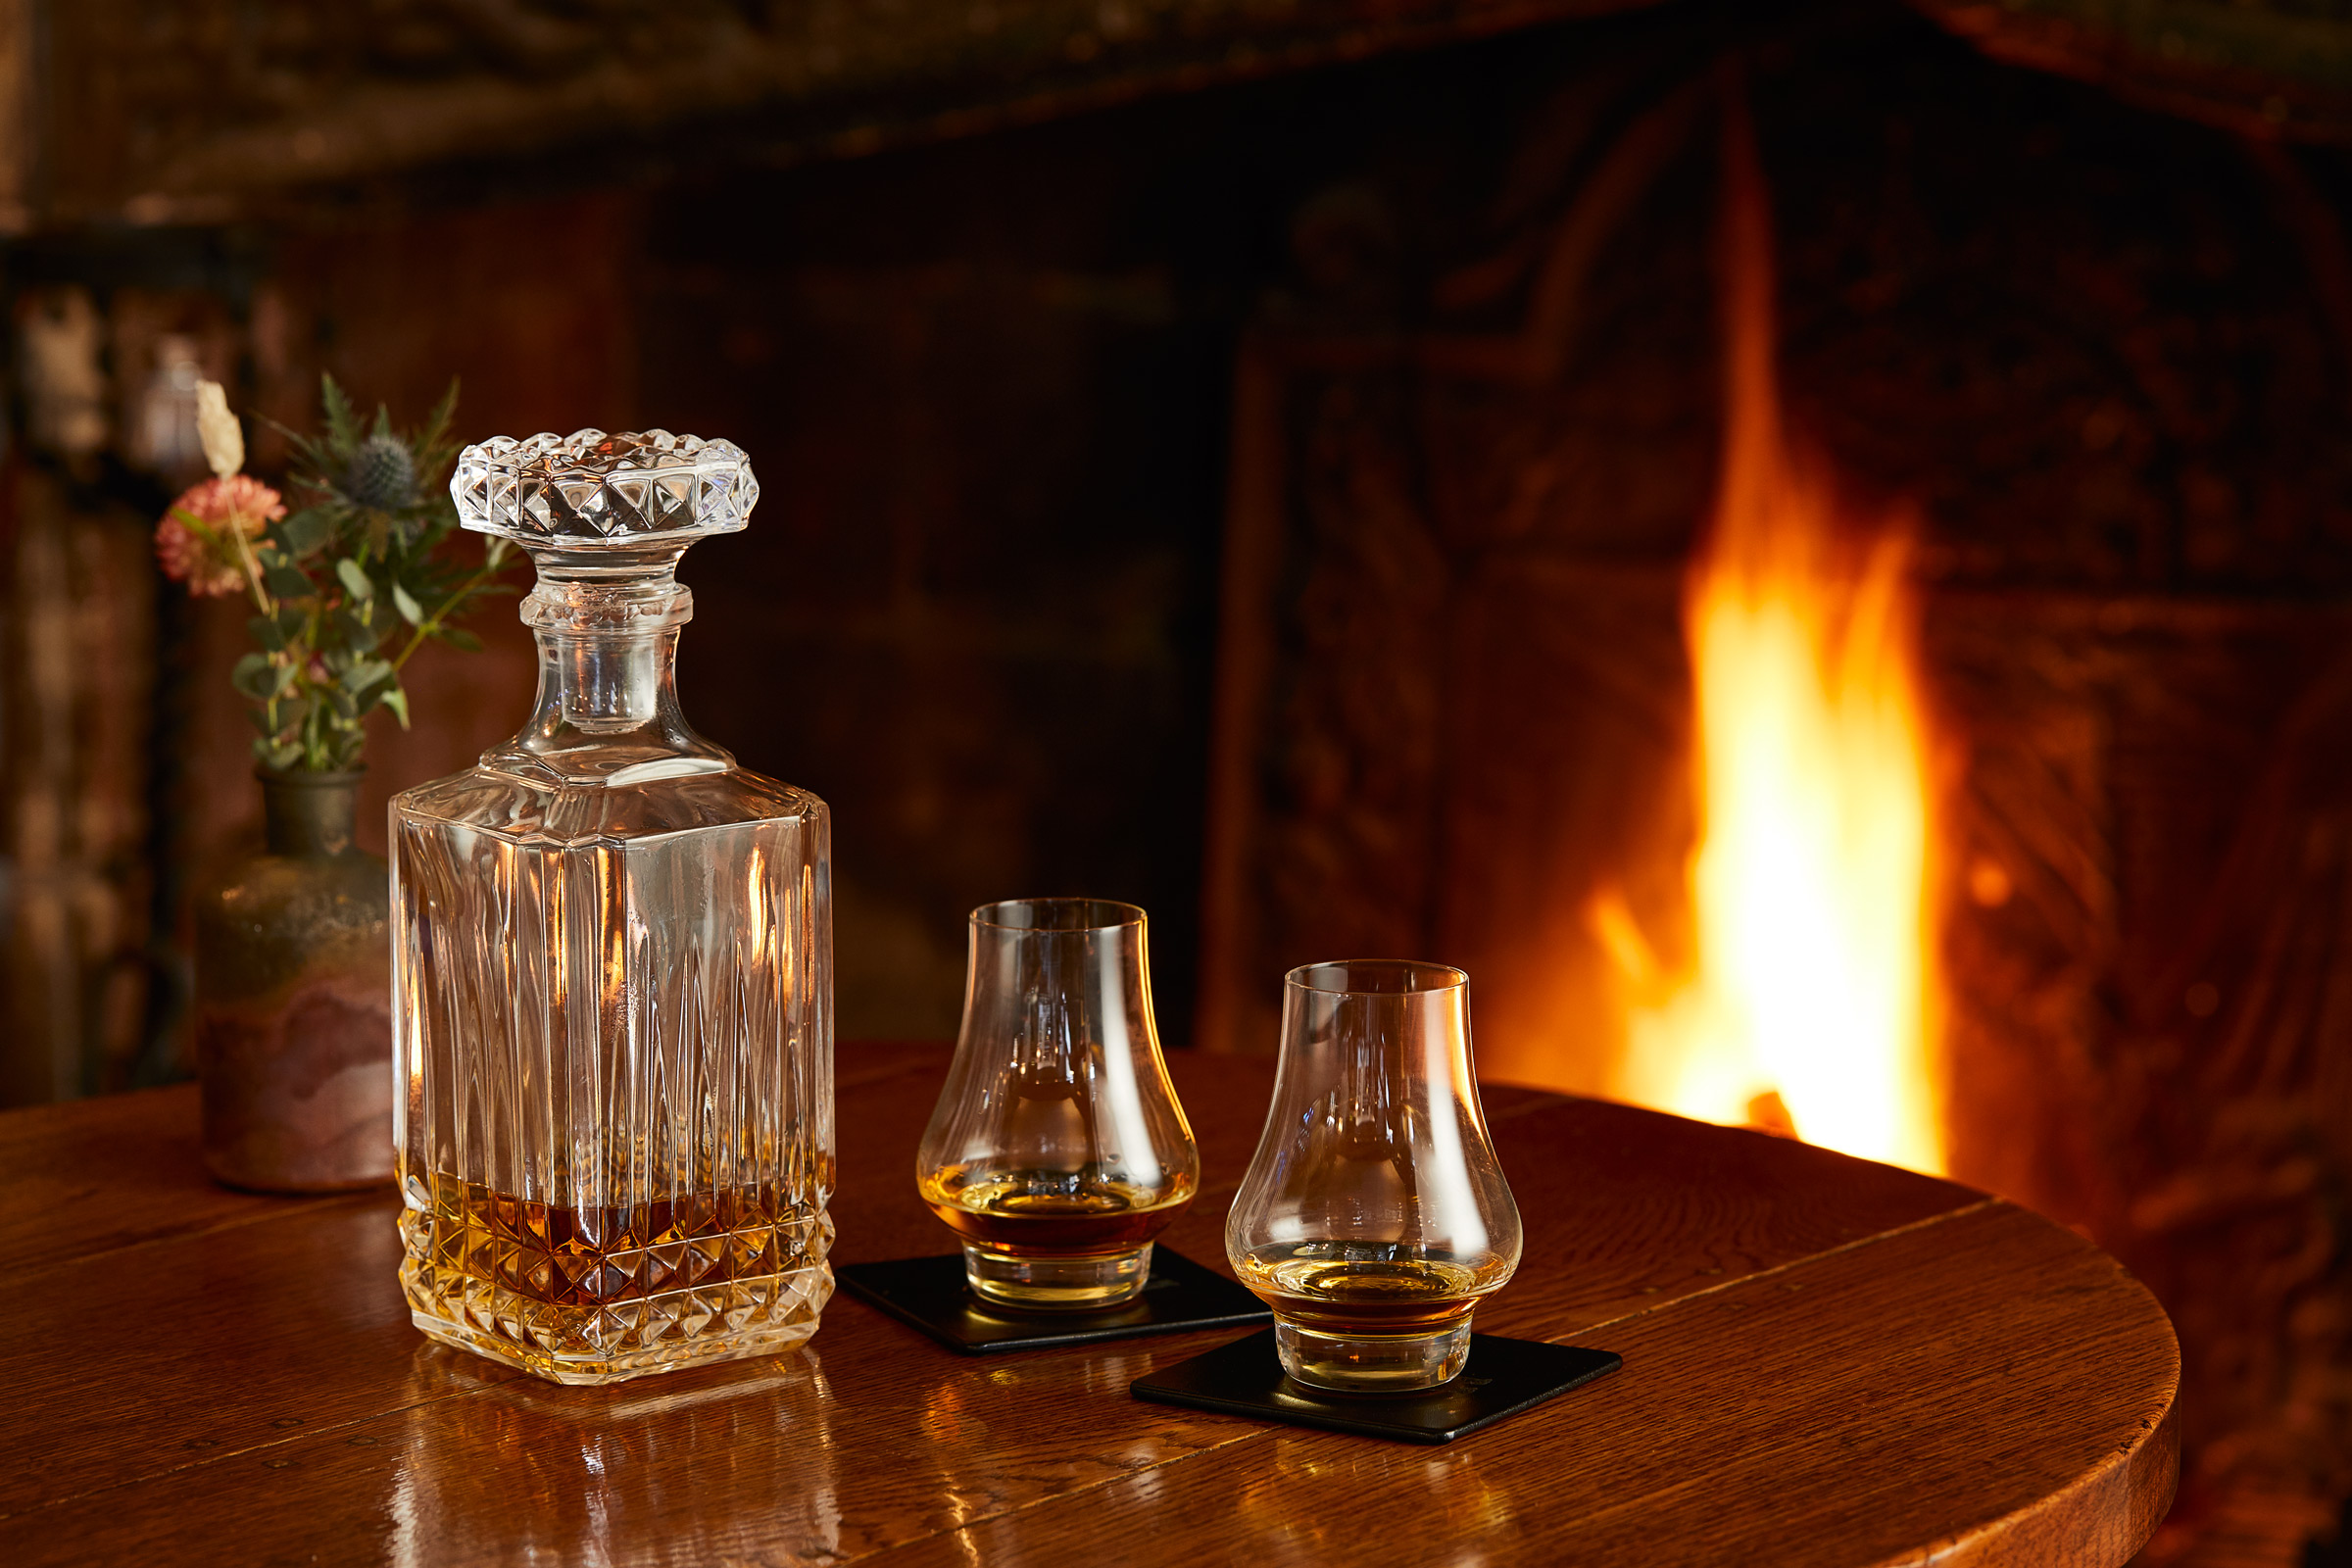 Fireside Whiskies at The Bear Hotel, Alastair Ferrier, Edinburgh based food and drink photographer